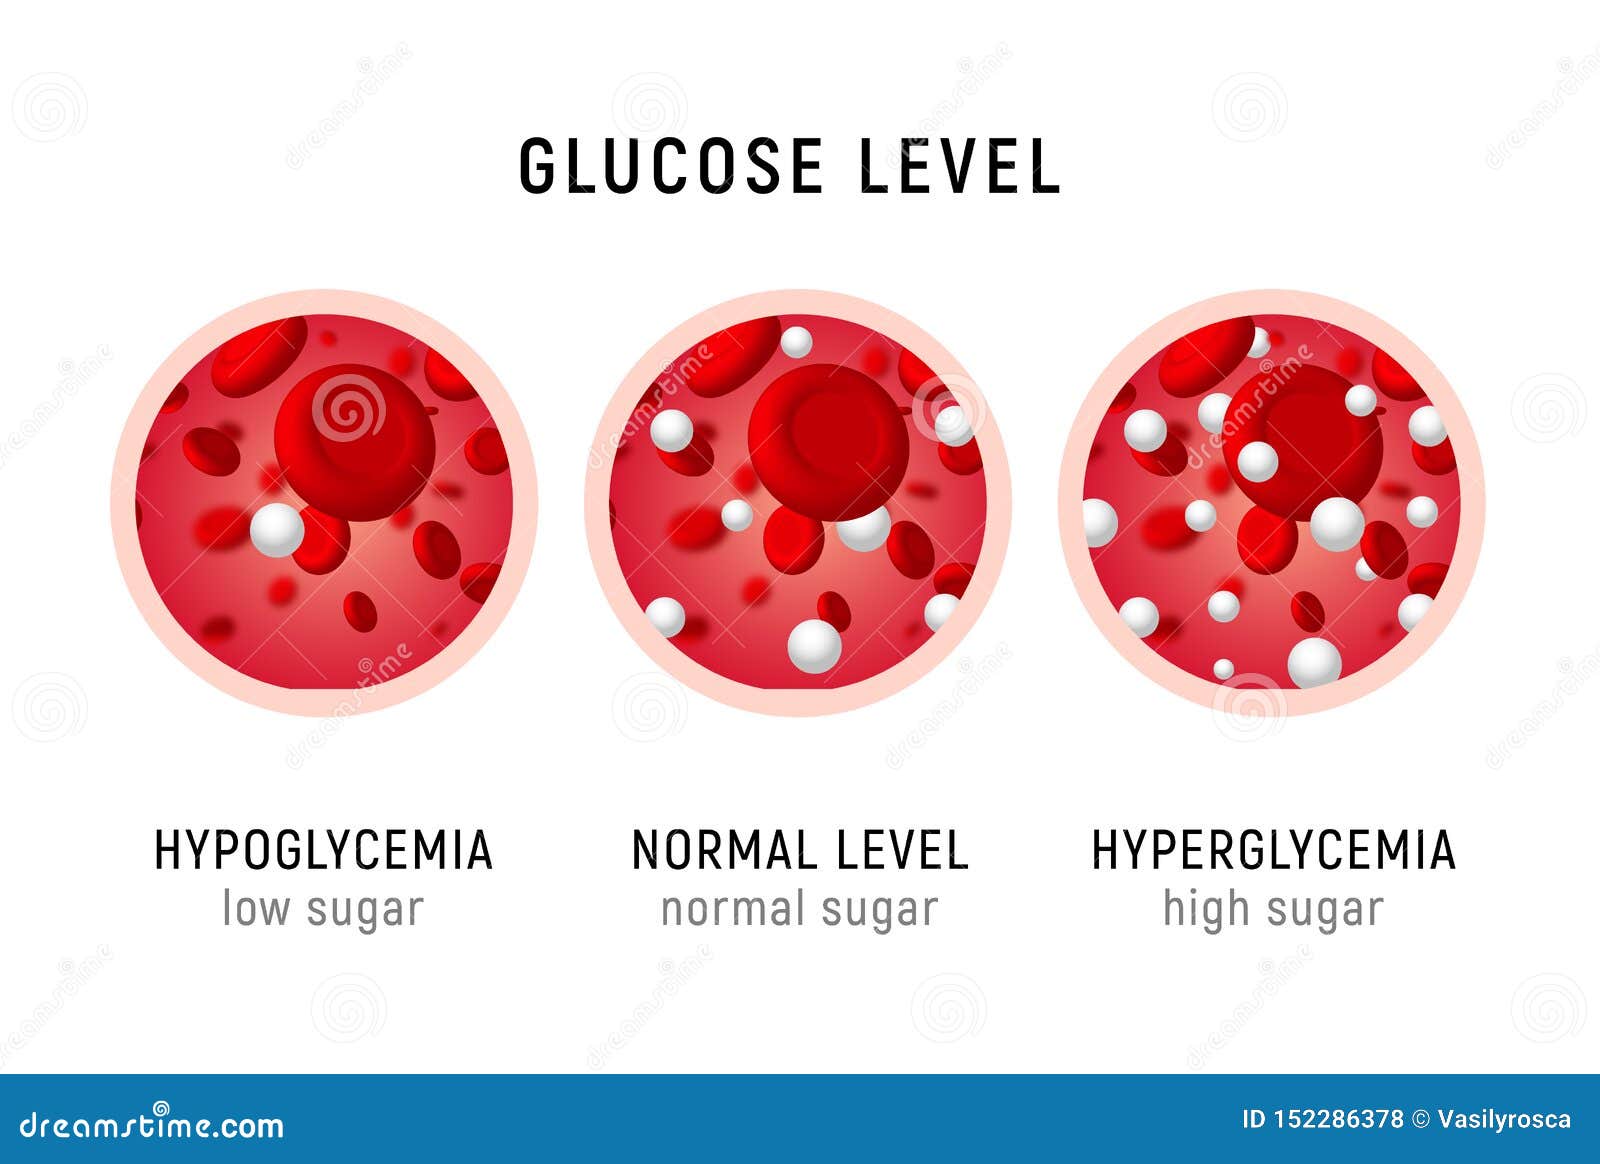 glucose blood level sugar test. diabetes insulin hypoglycemia or hyperglycemia diagram icon